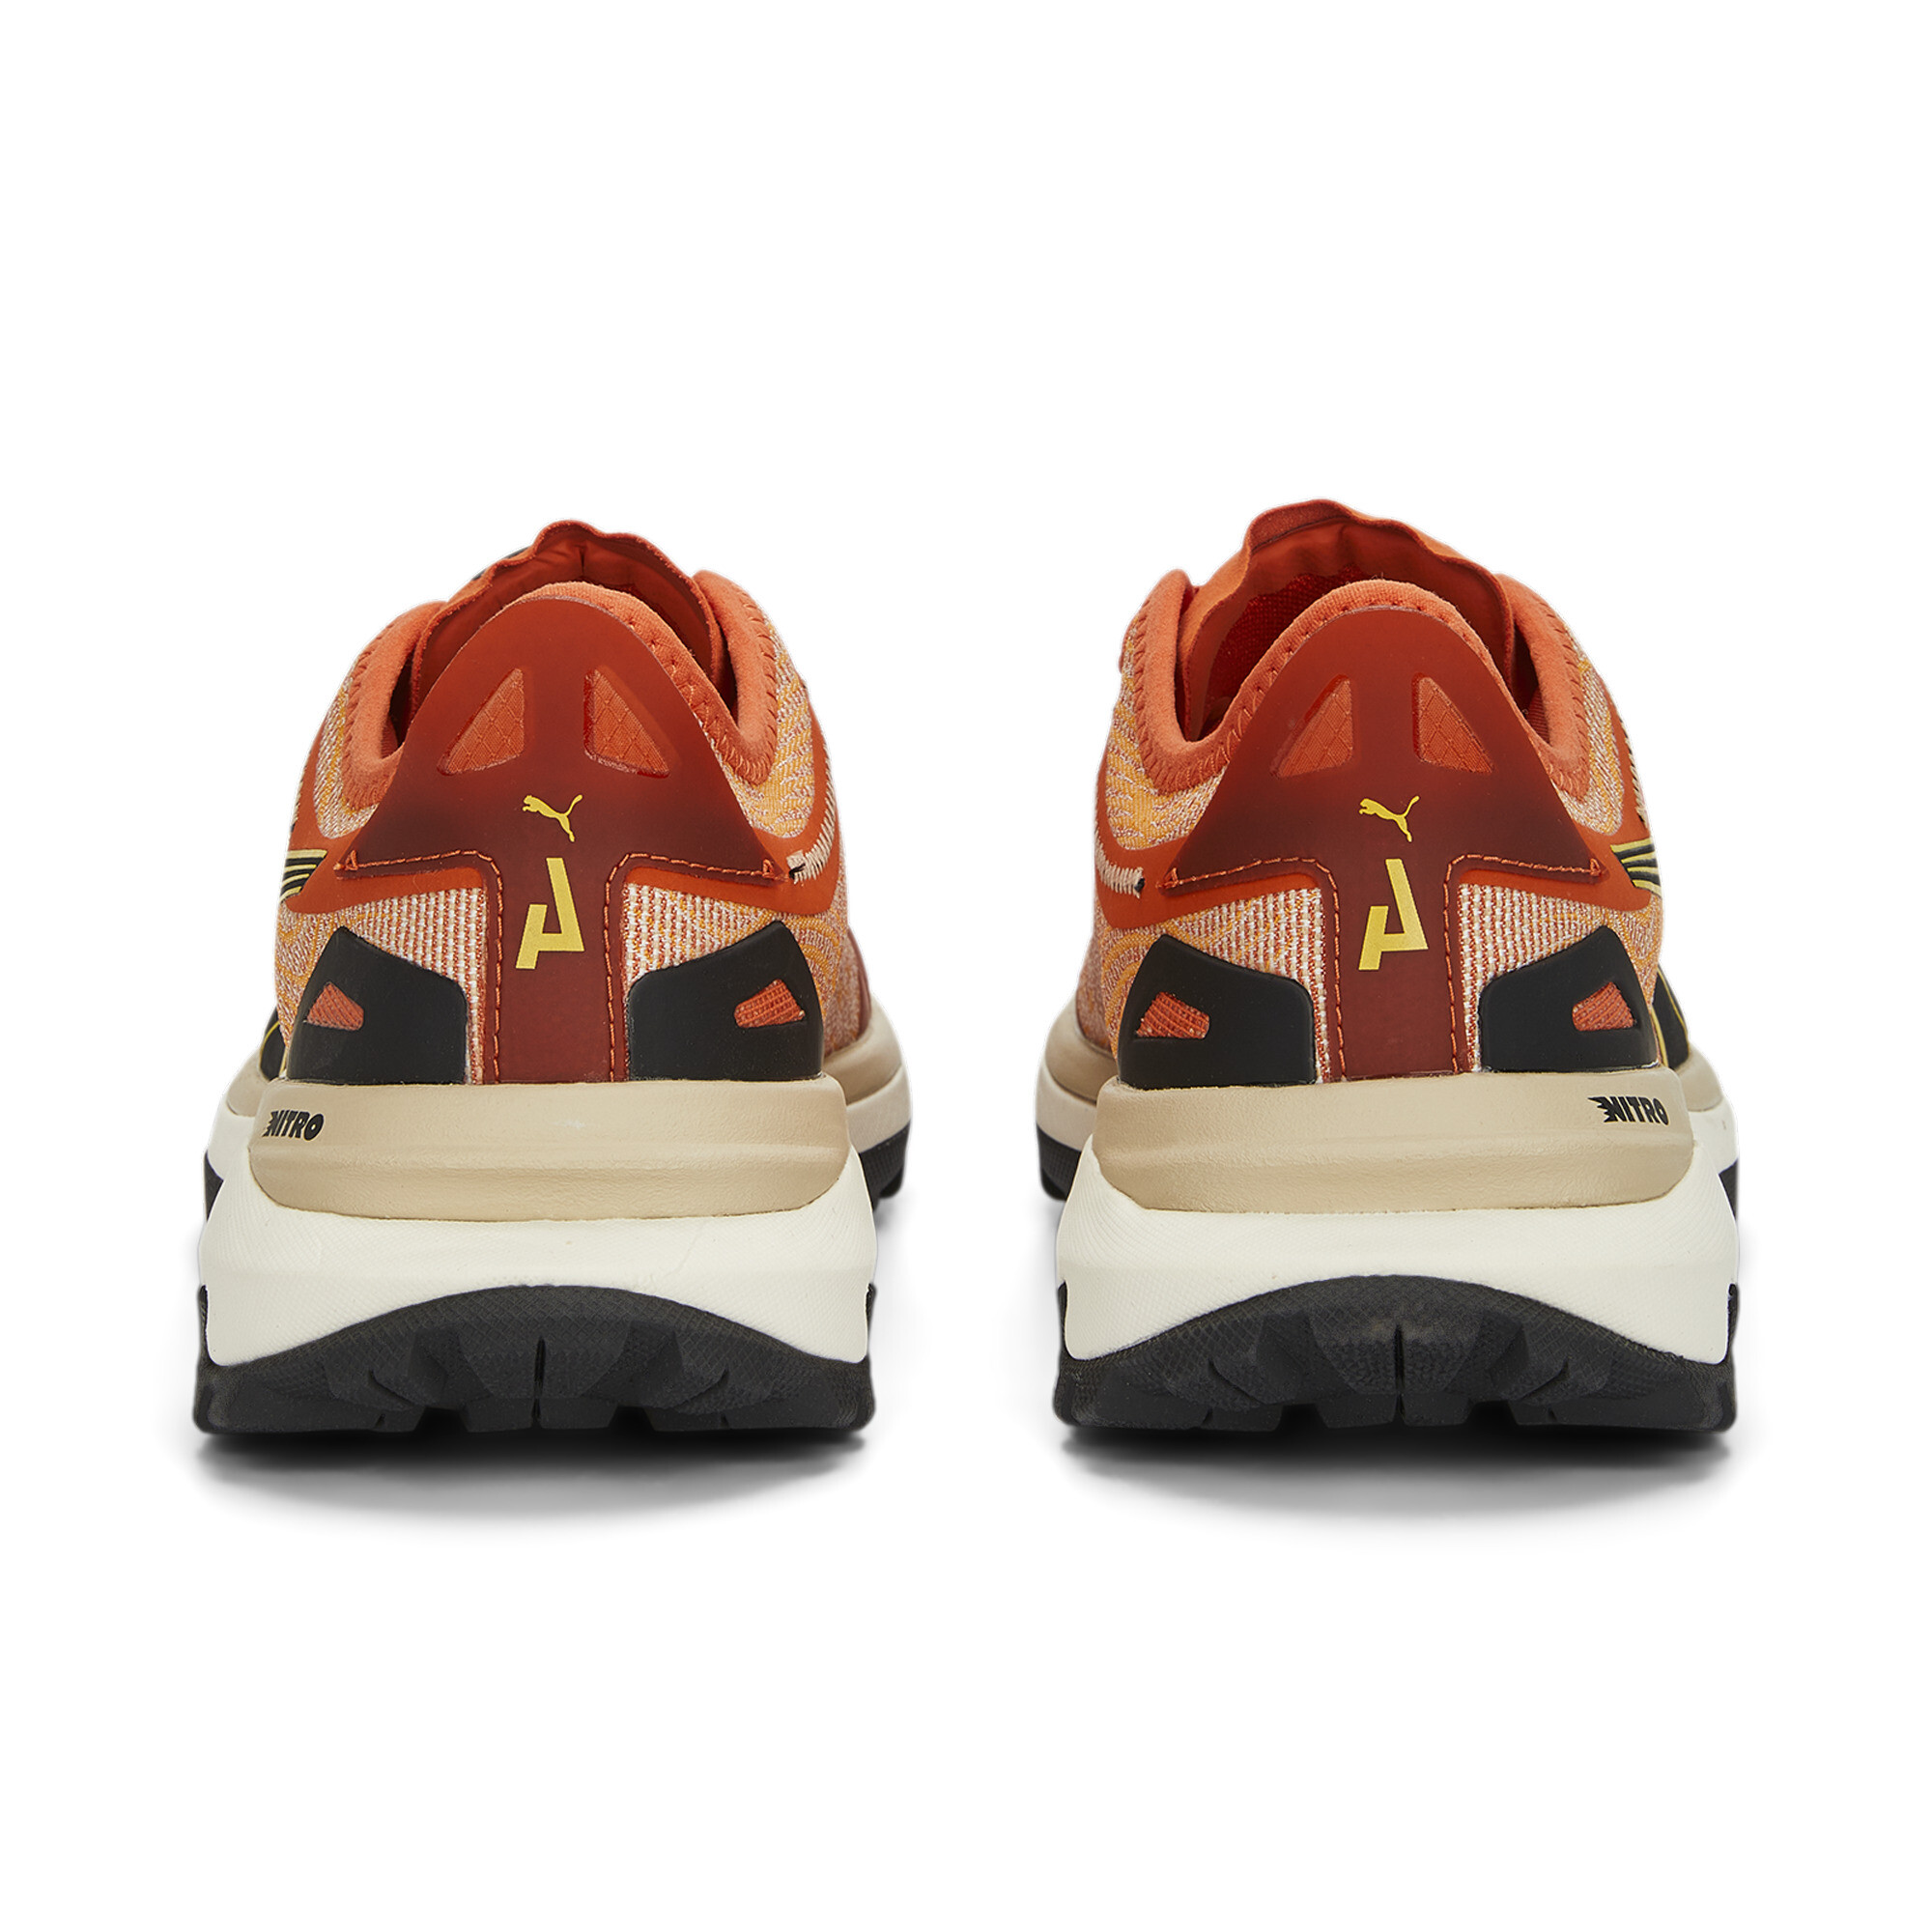 Men's PUMA Voyage NITRO 2 Trail Running Shoes In 110 - Orange, Size EU 42